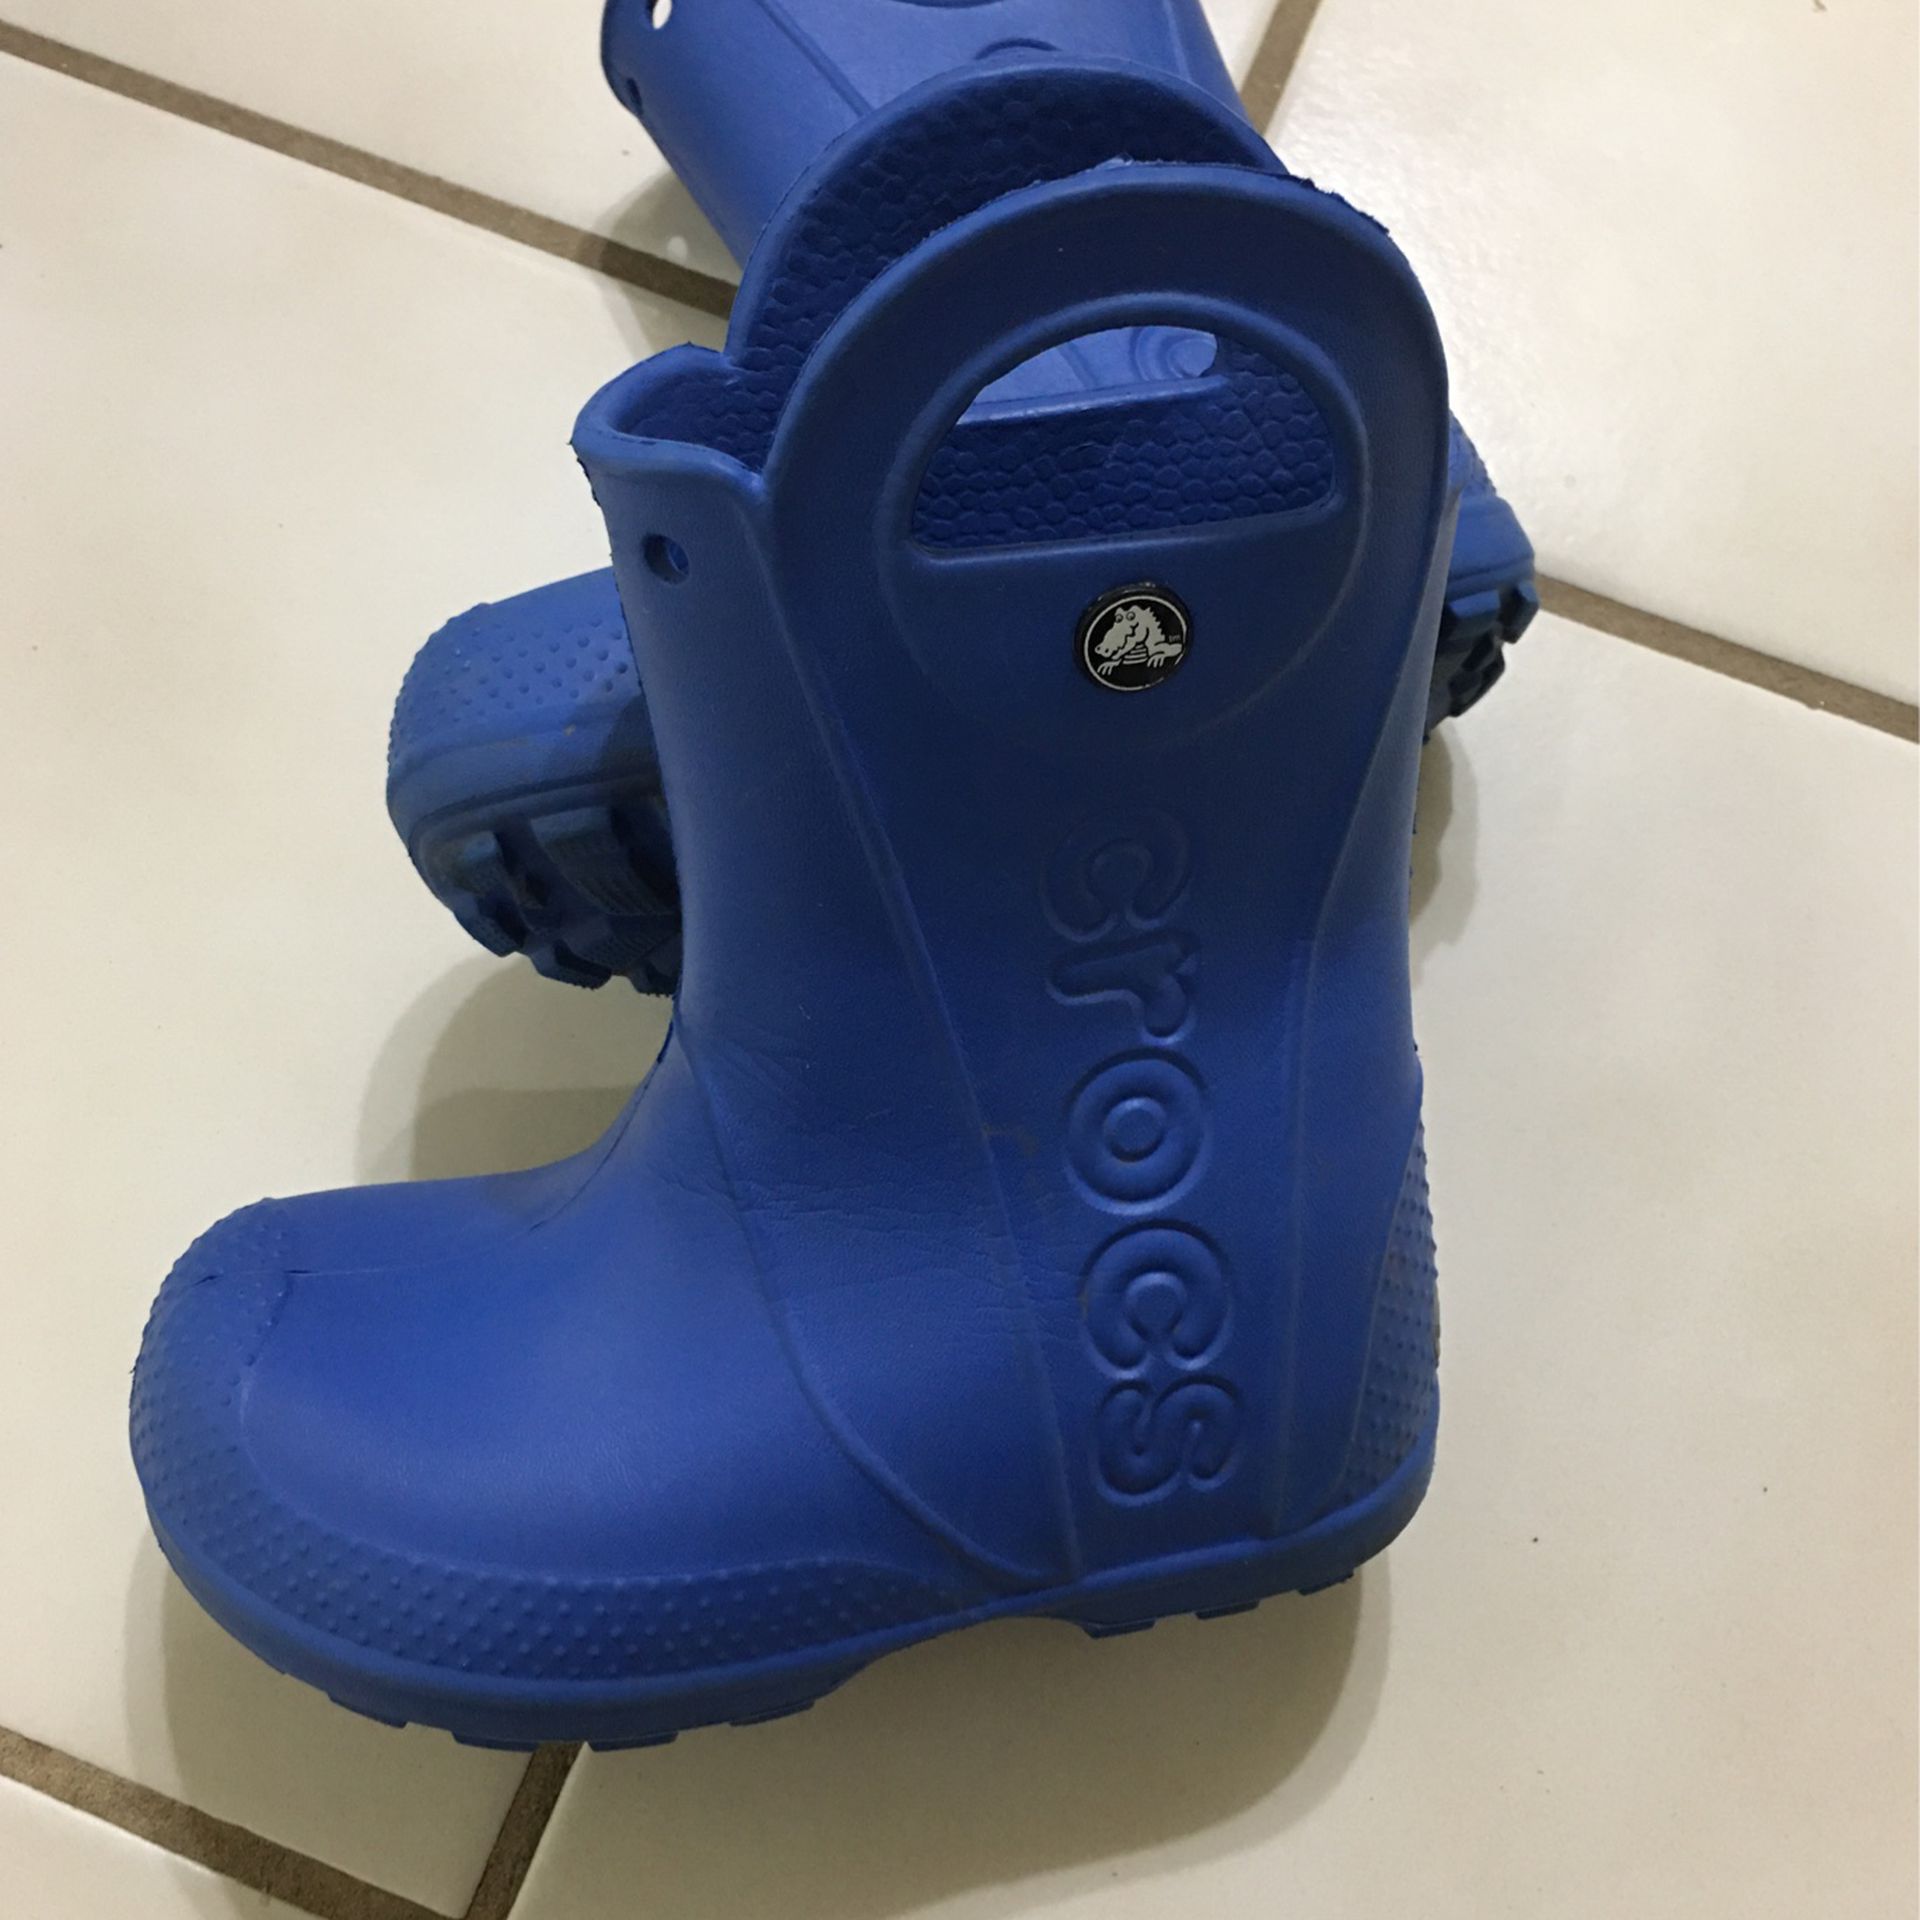 Nearly New Unisex Crocs Rain Boot Size 9C